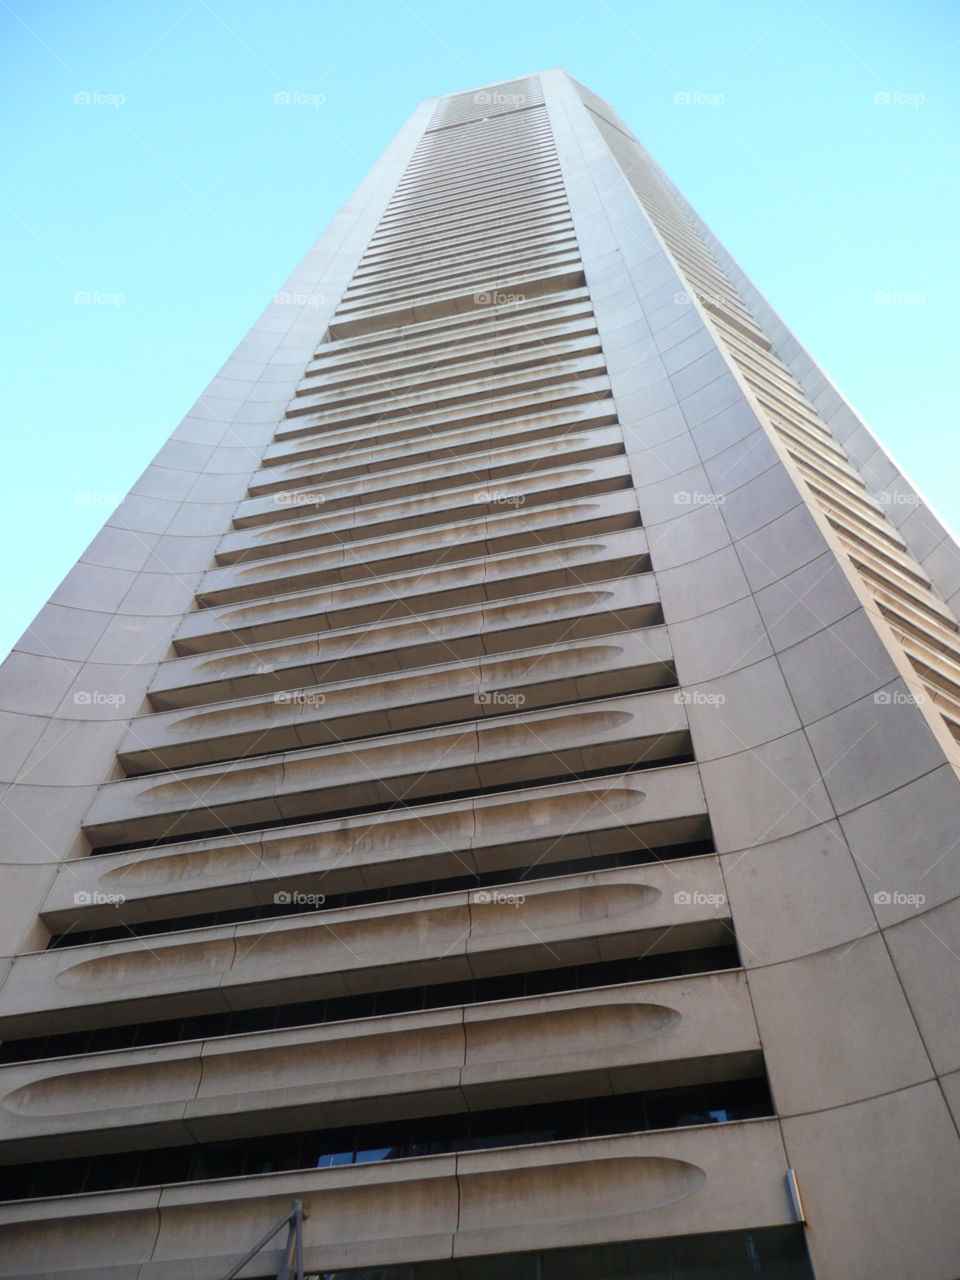 skyscraper building ladder below by henweb